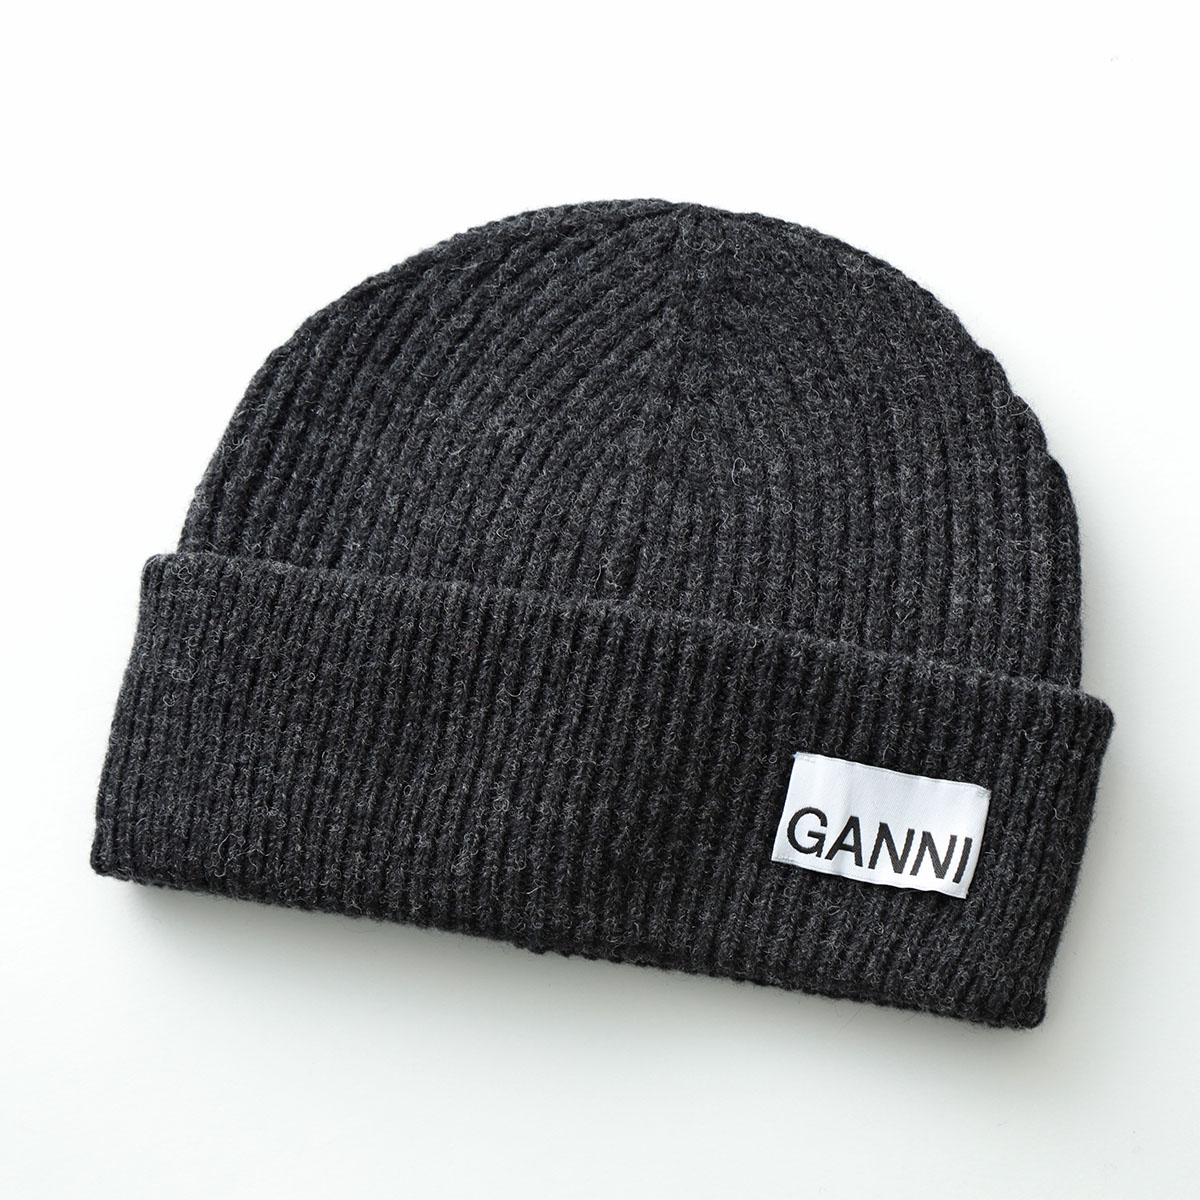 GANNI ガニー ニット帽 Light Structured Rib Knit Beanie A5118 A5353 A5354 5880  レディース ビーニー リブ ニットキャップ ロゴ 帽子 カラー3色